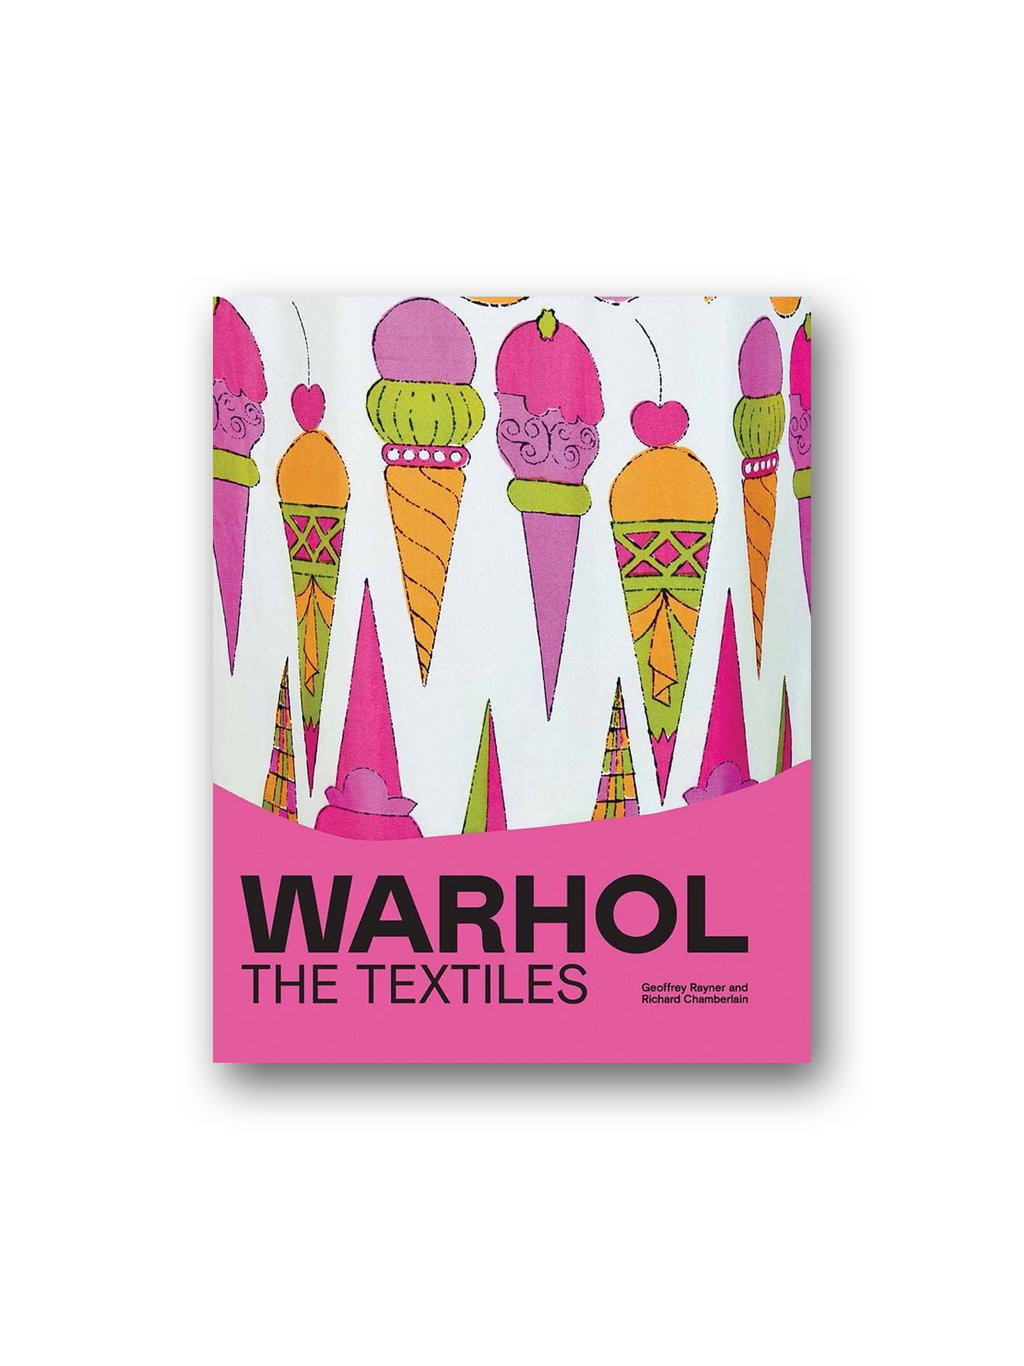 Warhol: The Textiles